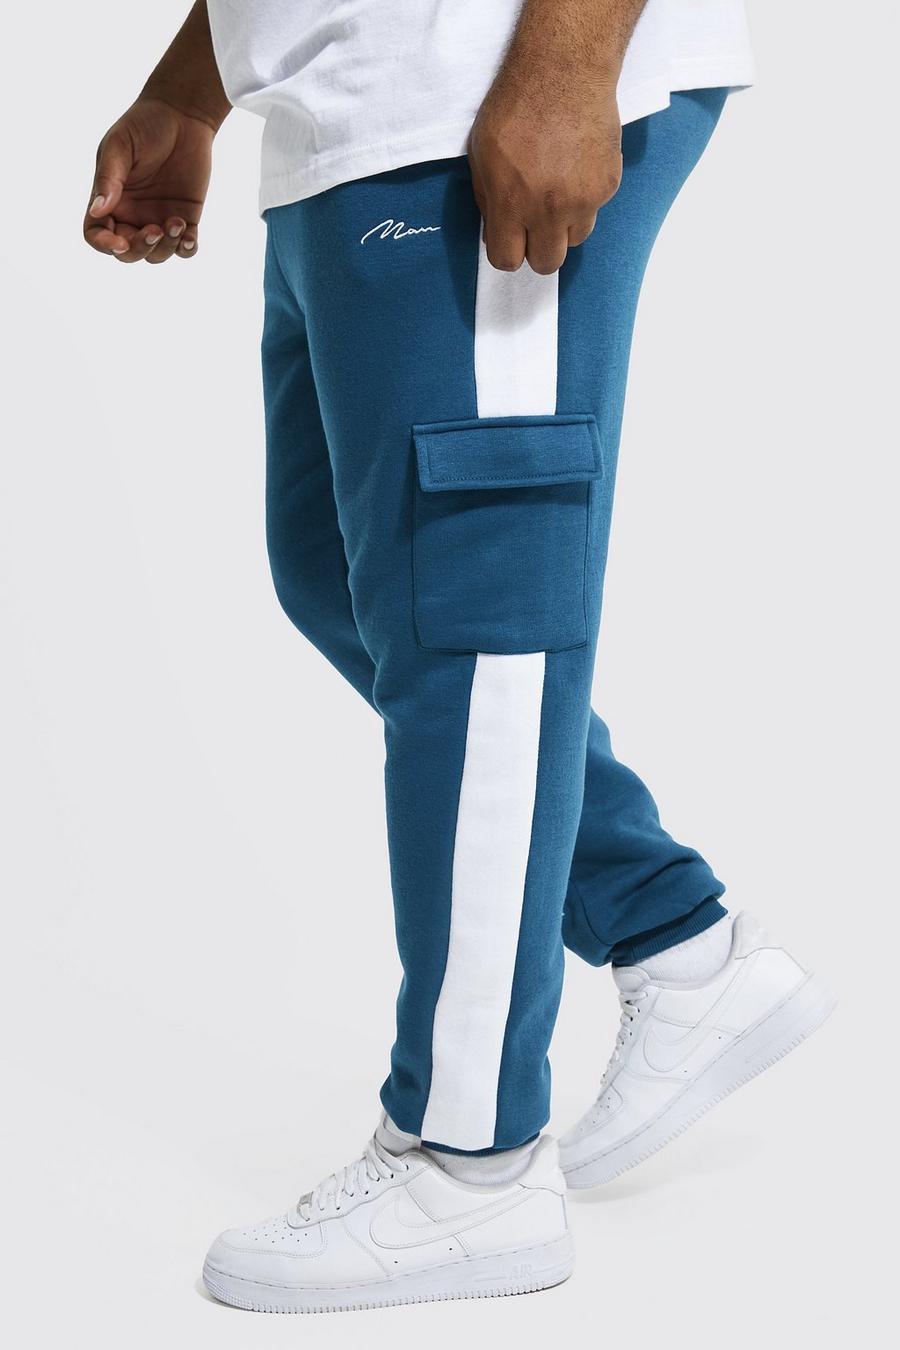 Blue azul מכנסי ריצה בגזרת סקיני ובסגנון דגמ'ח עם כיתוב Man, מידות גדולות